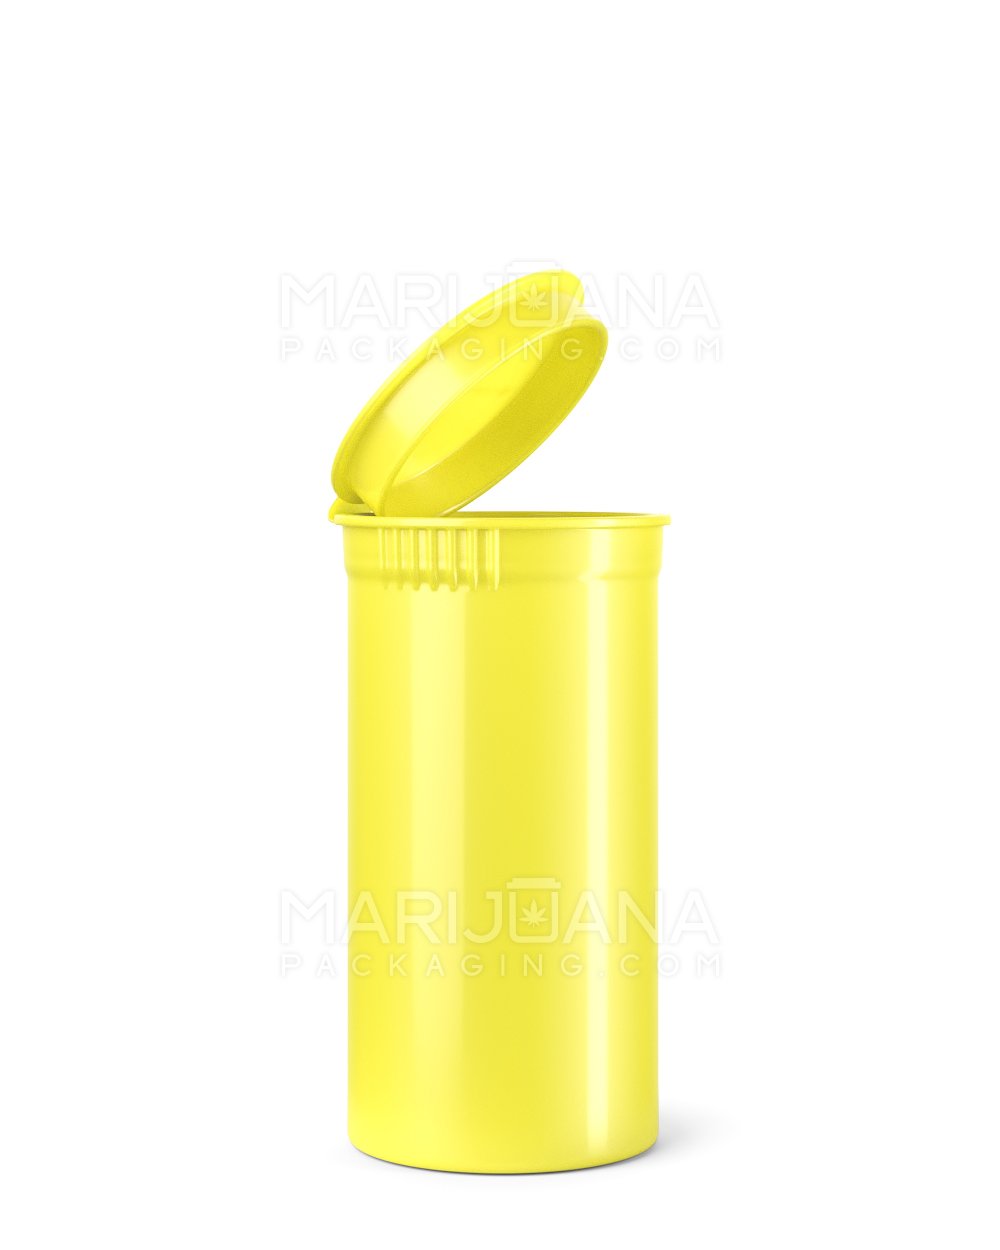 Child Resistant Opaque Lemon Pop Top Bottles | 13dr - 2g | Sample - 1